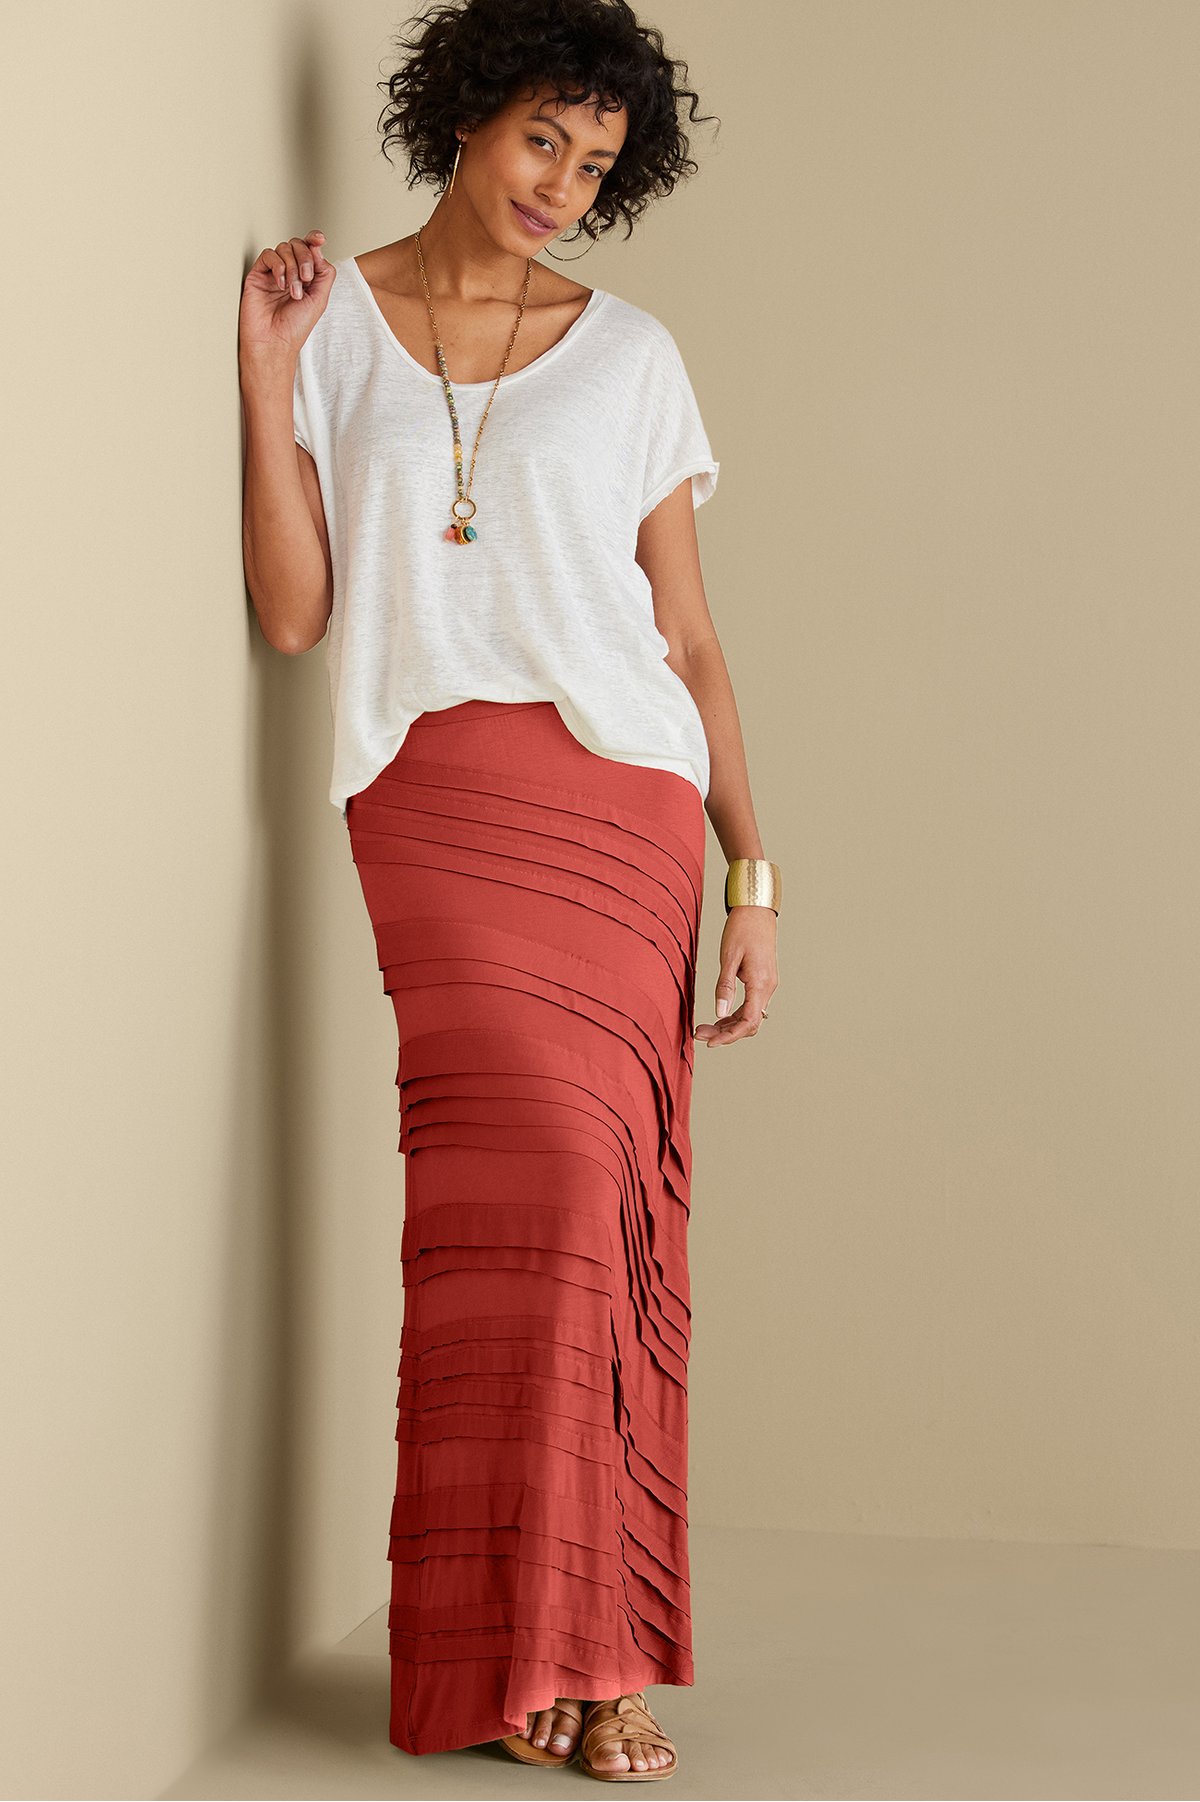 Women's Rosemary Skirt by Soft Surroundings, in Red Ochre size L (14-16)